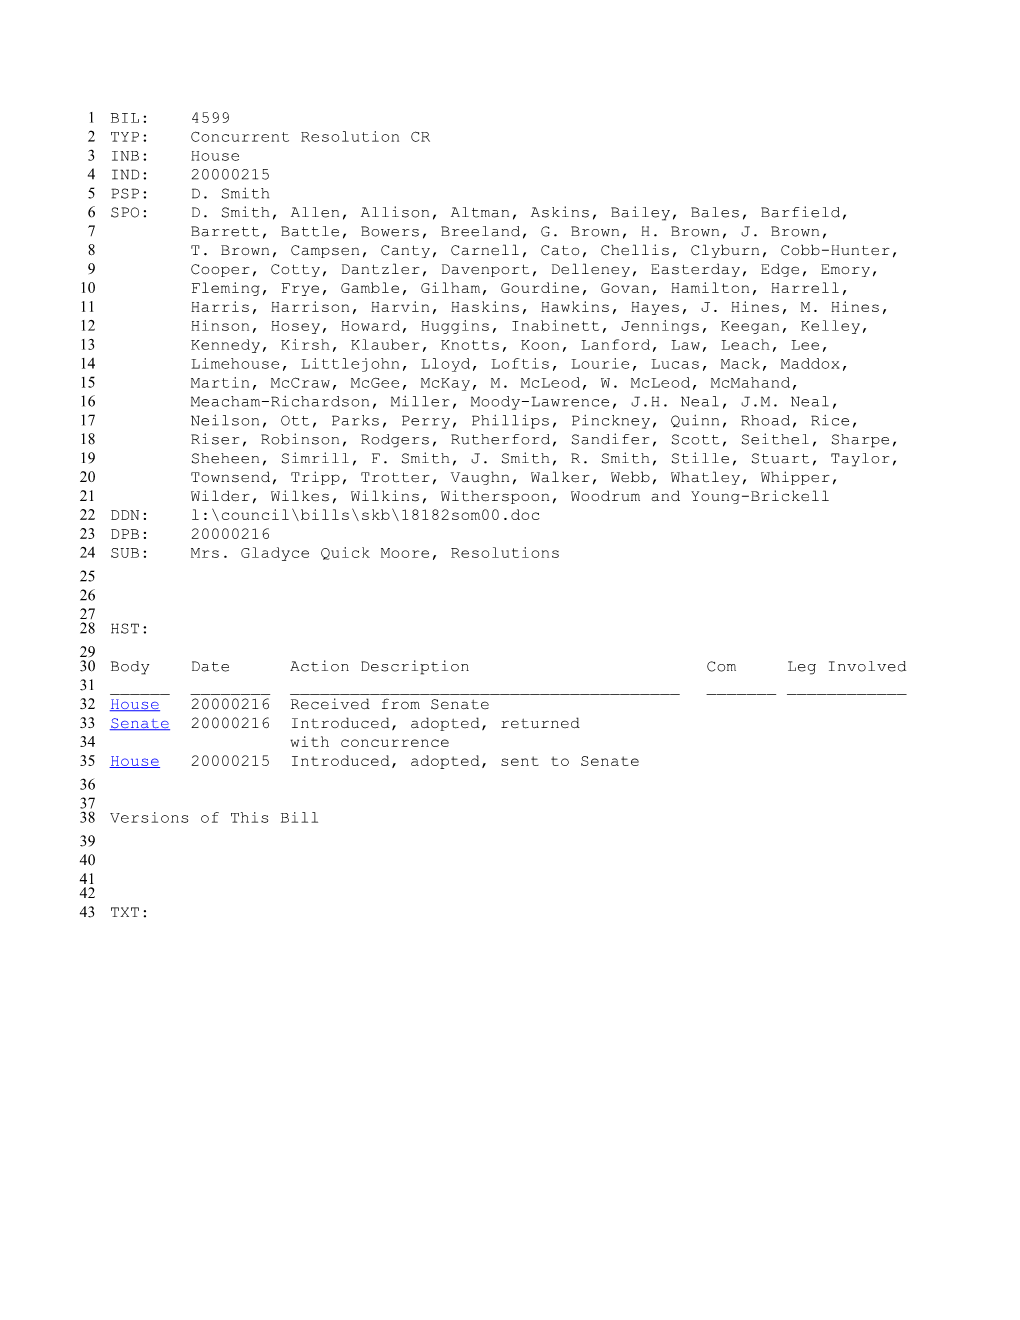 1999-2000 Bill 4599: Mrs. Gladyce Quick Moore, Resolutions - South Carolina Legislature Online